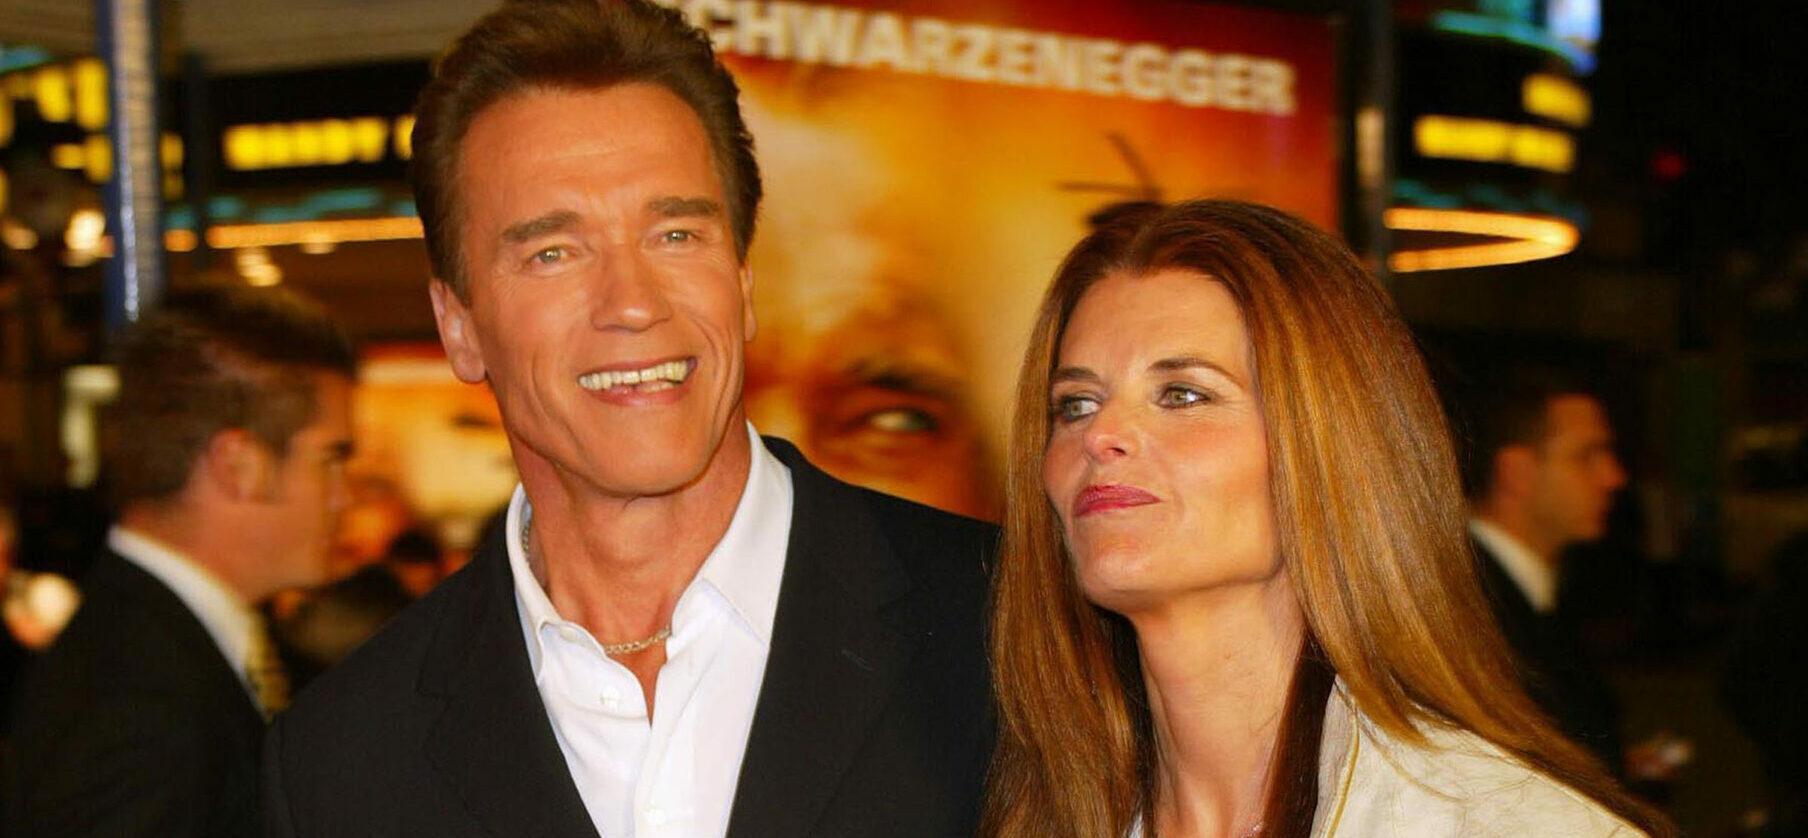 Arnold Schwarzenegger Speaks On His Divorce From Maria Shriver, Admits ‘Failure’